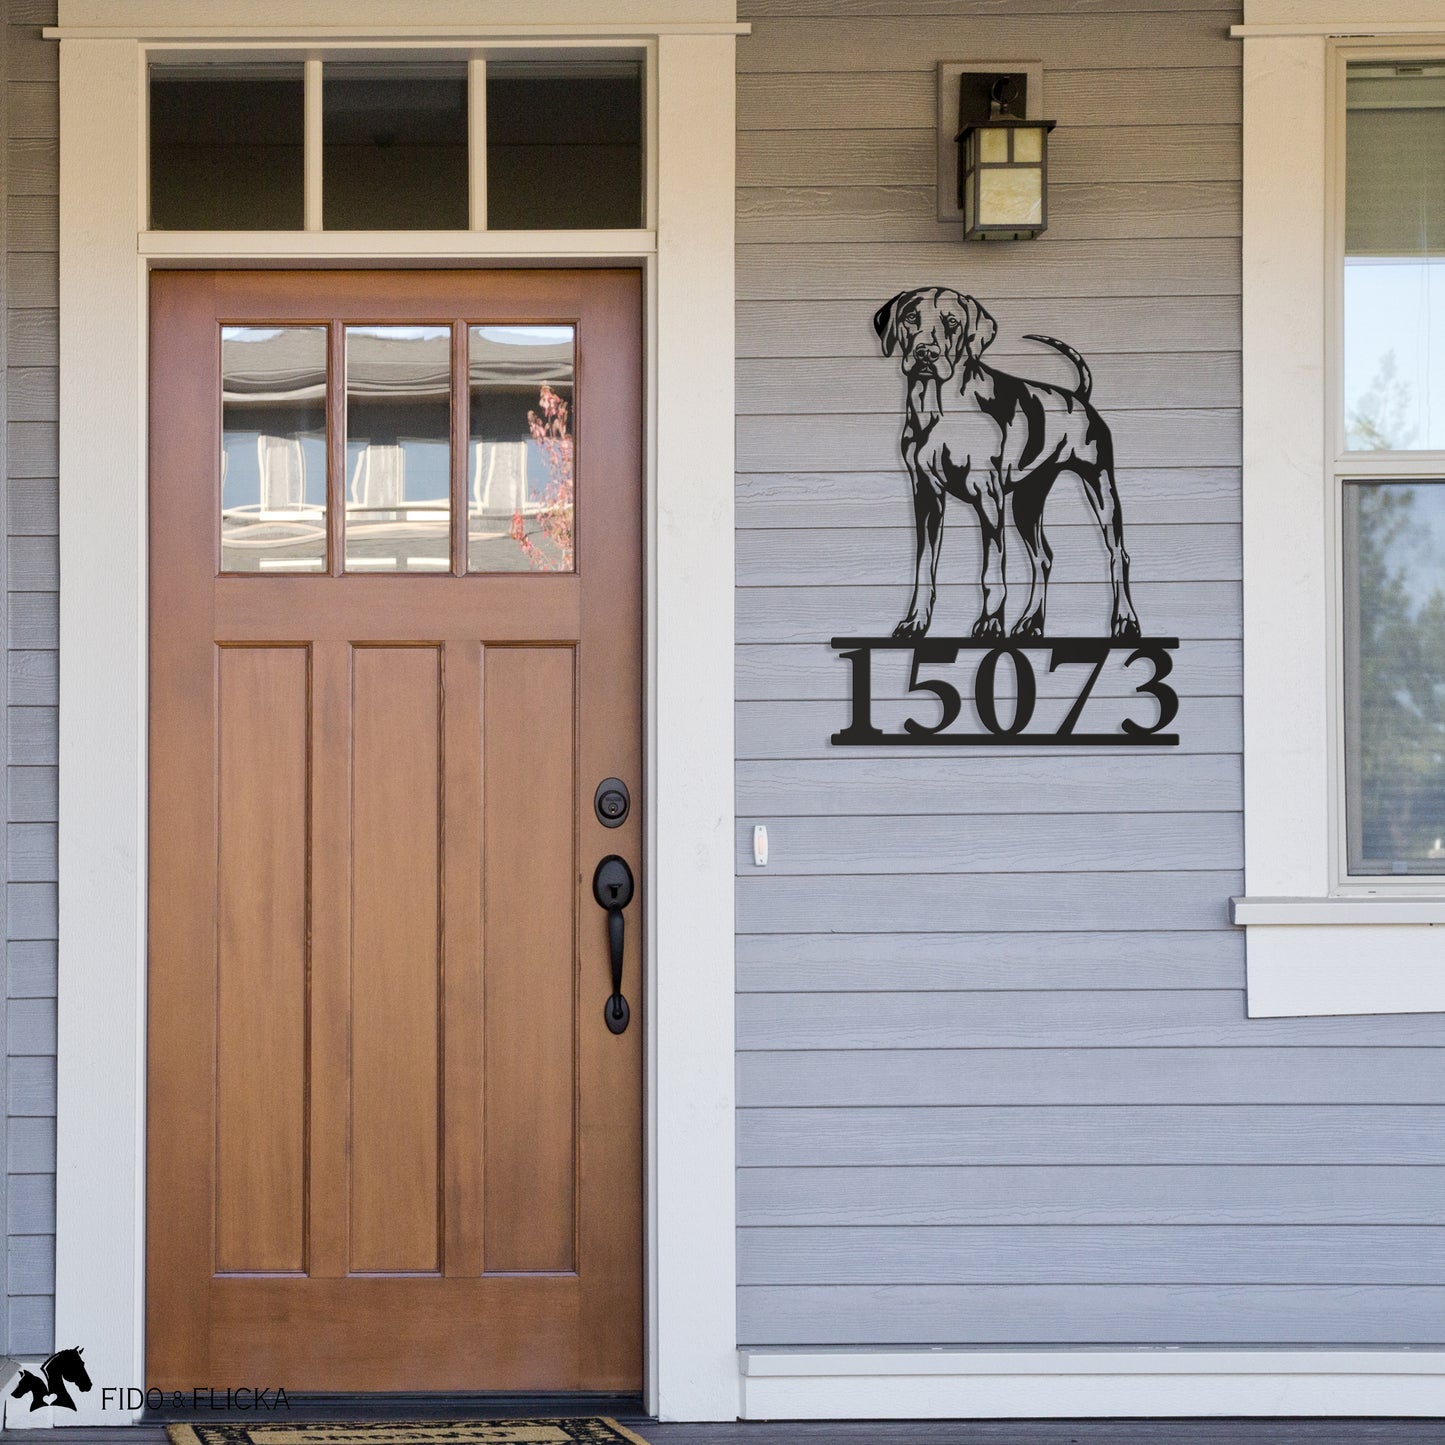 Louisiana Catahoula Leopard Dog house number sign